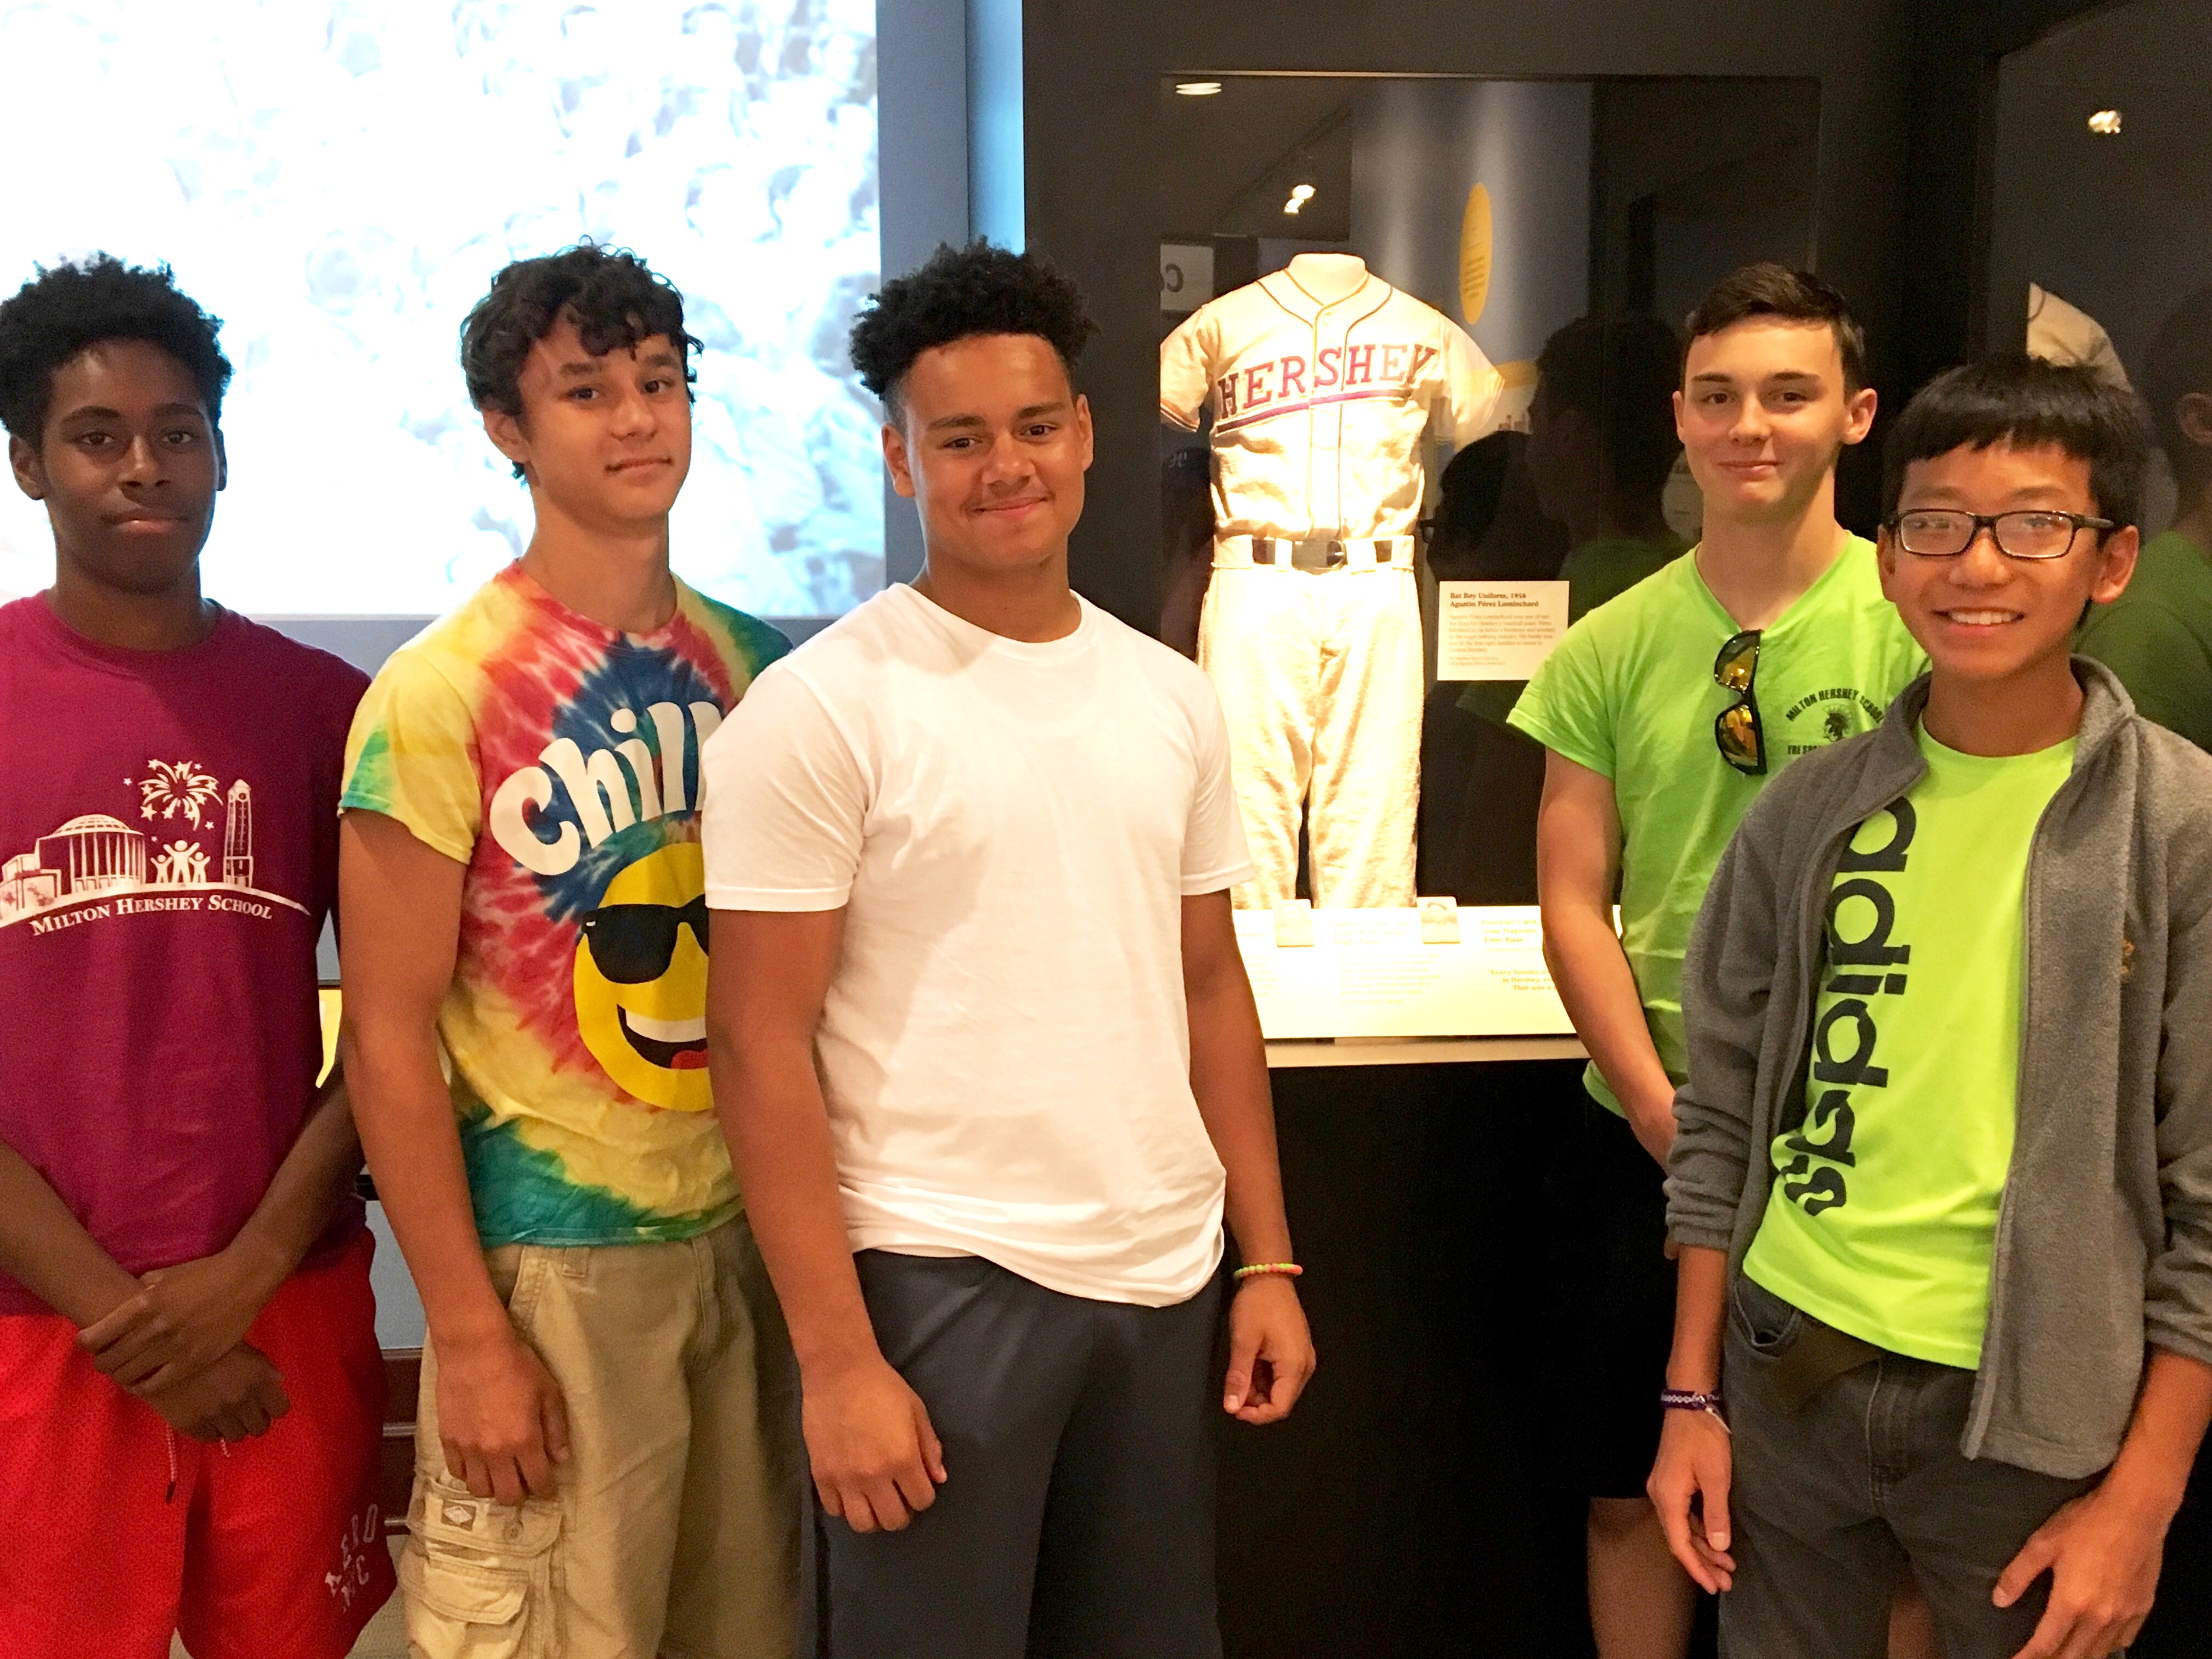 MHS baseball team visits an exhibit